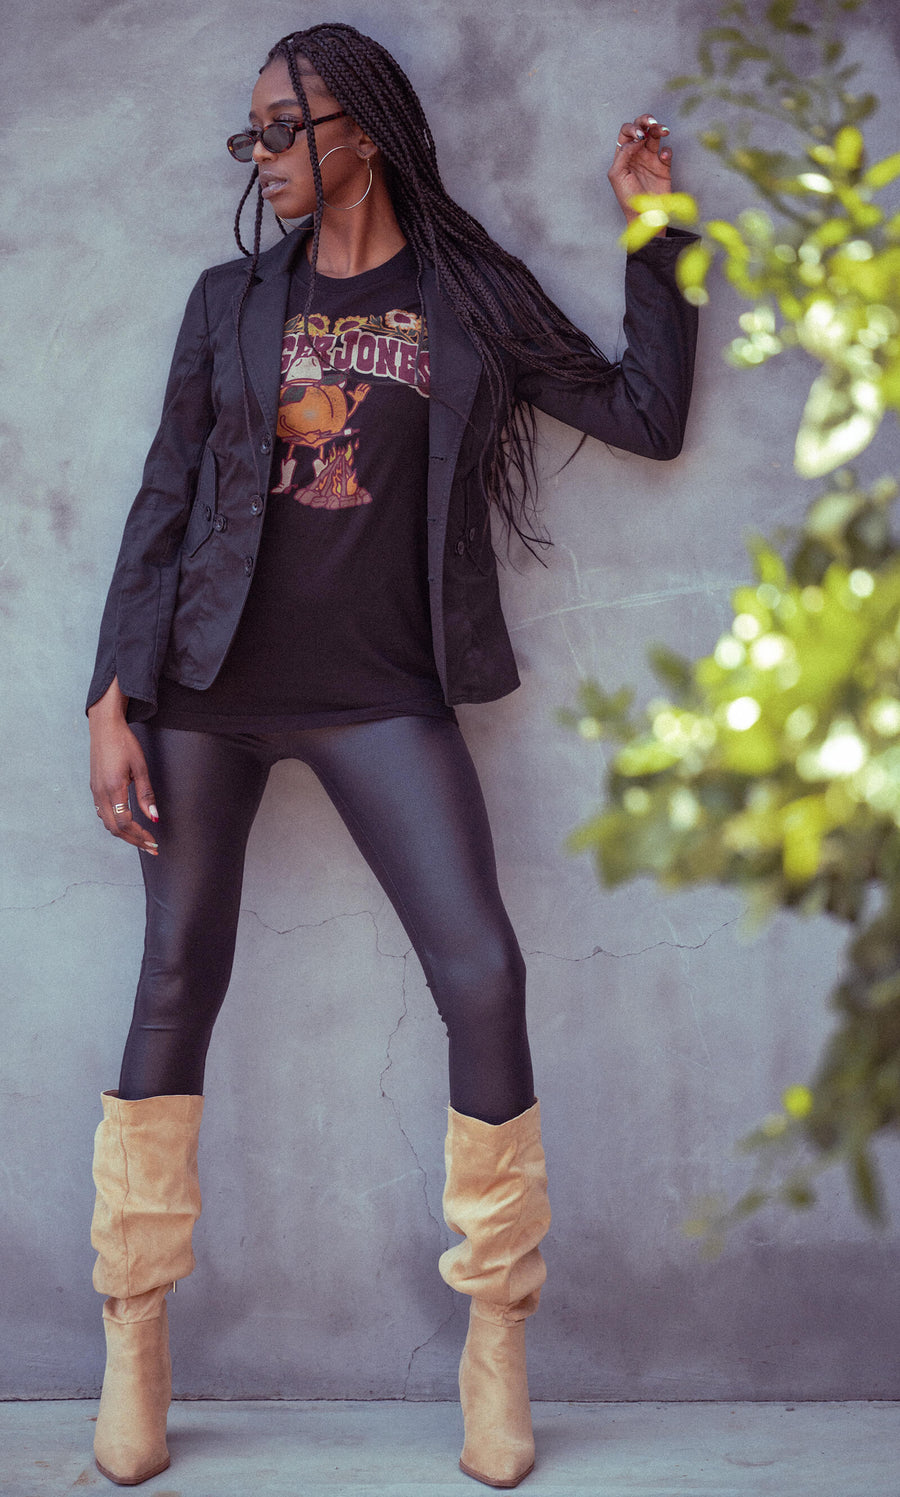 Model standing against a wall wearing a Danger Jones Simpatico Women's Tee Shirt